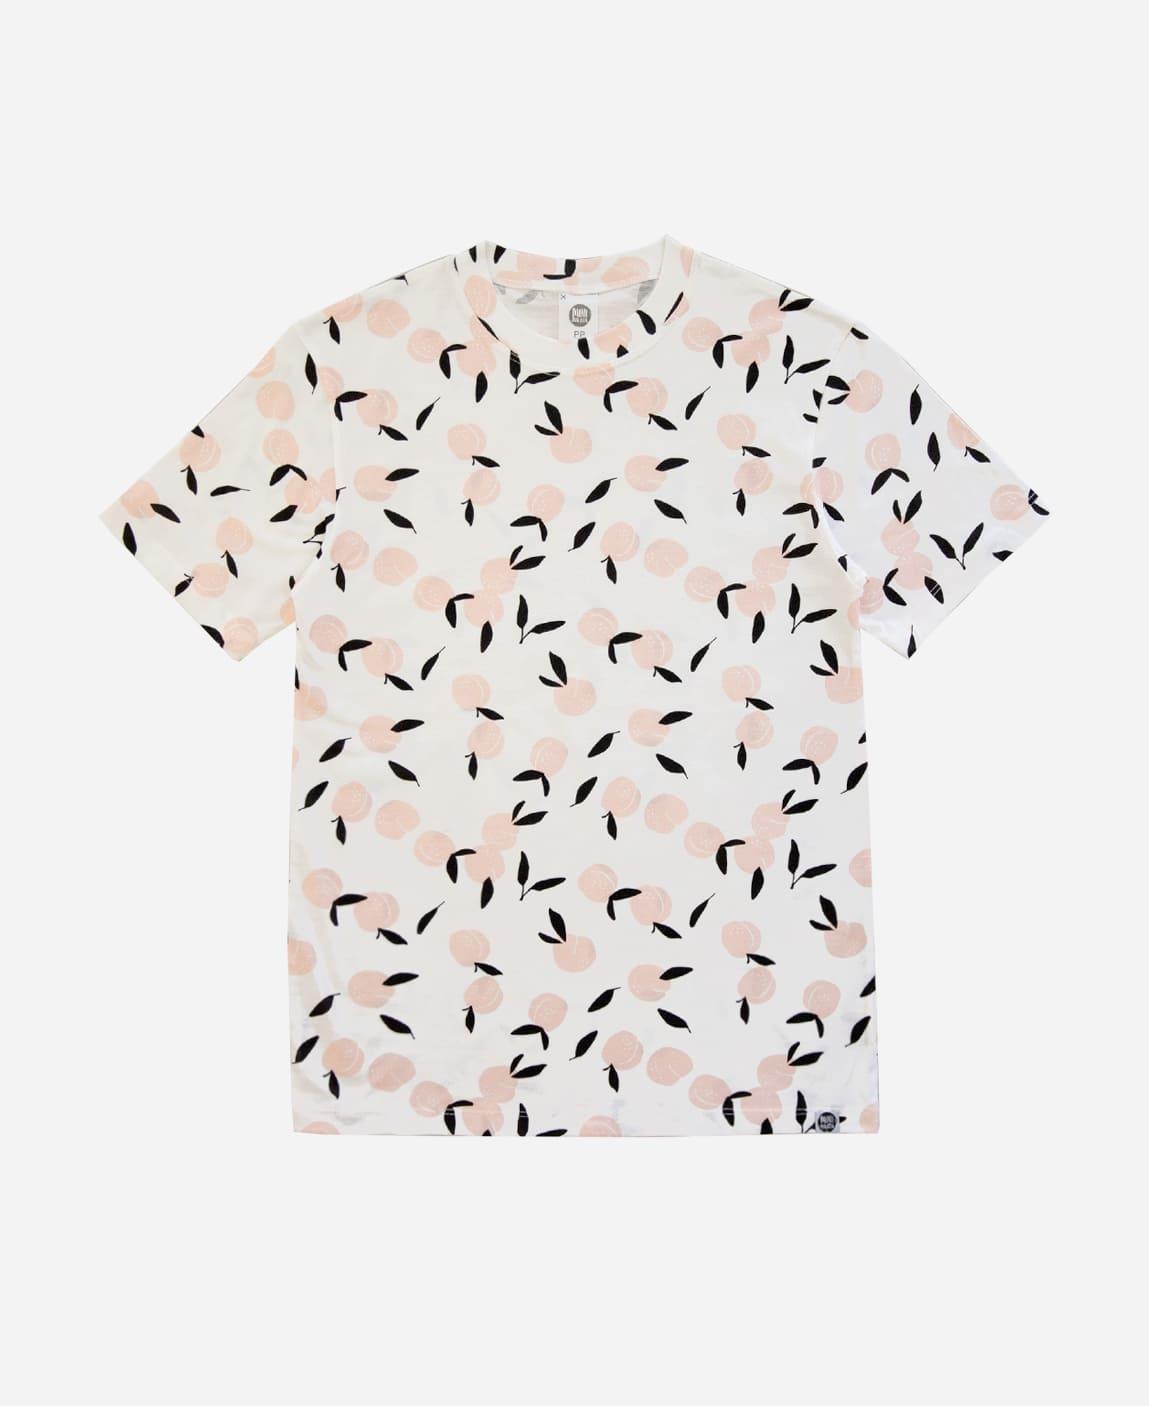 Camiseta Adulto Unissex Apricots - MiniMalista Baby - b2b, com-desconto-mm10, Meia Estação, Menina, minime, tab-tam-cam-adulto-2 -bebê-minimalista-estiloso